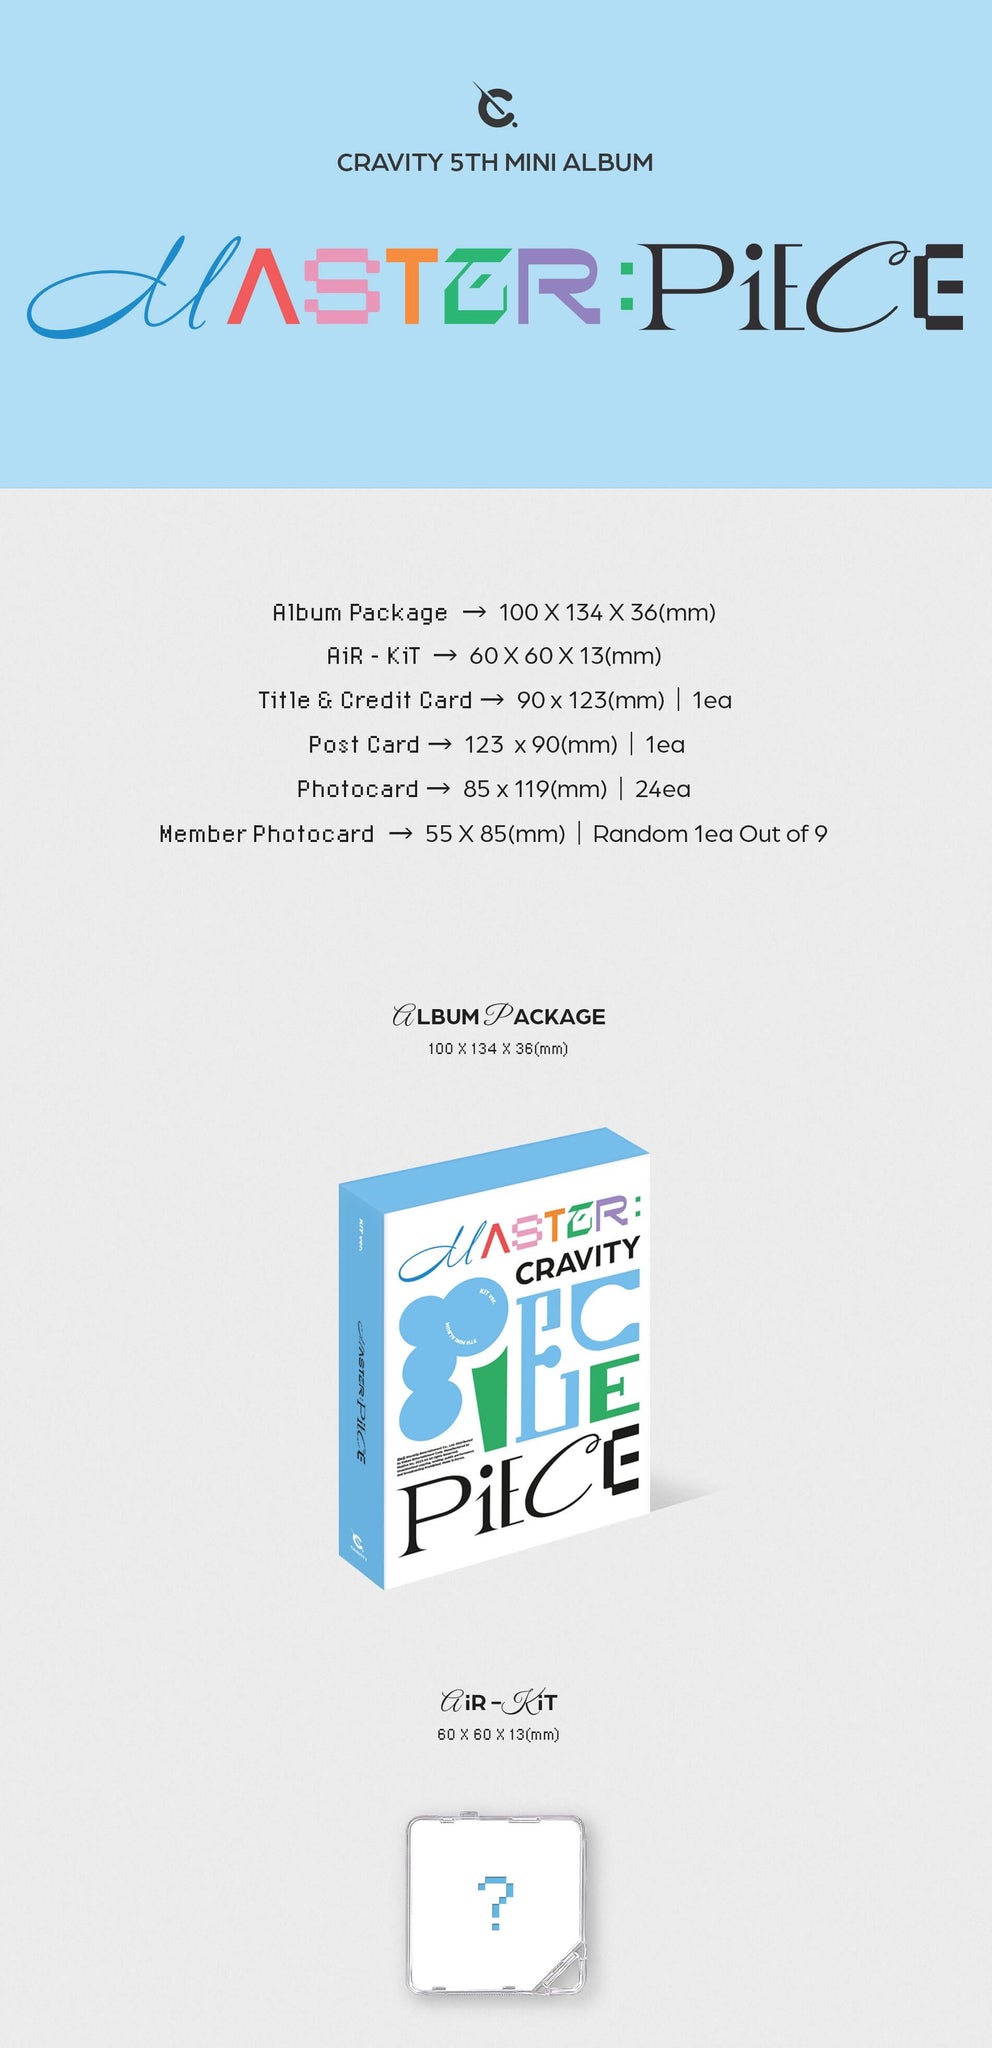 CRAVITY 5th Mini Album MASTER:PIECE - KiT Version Inclusions Album Package AiR KiT